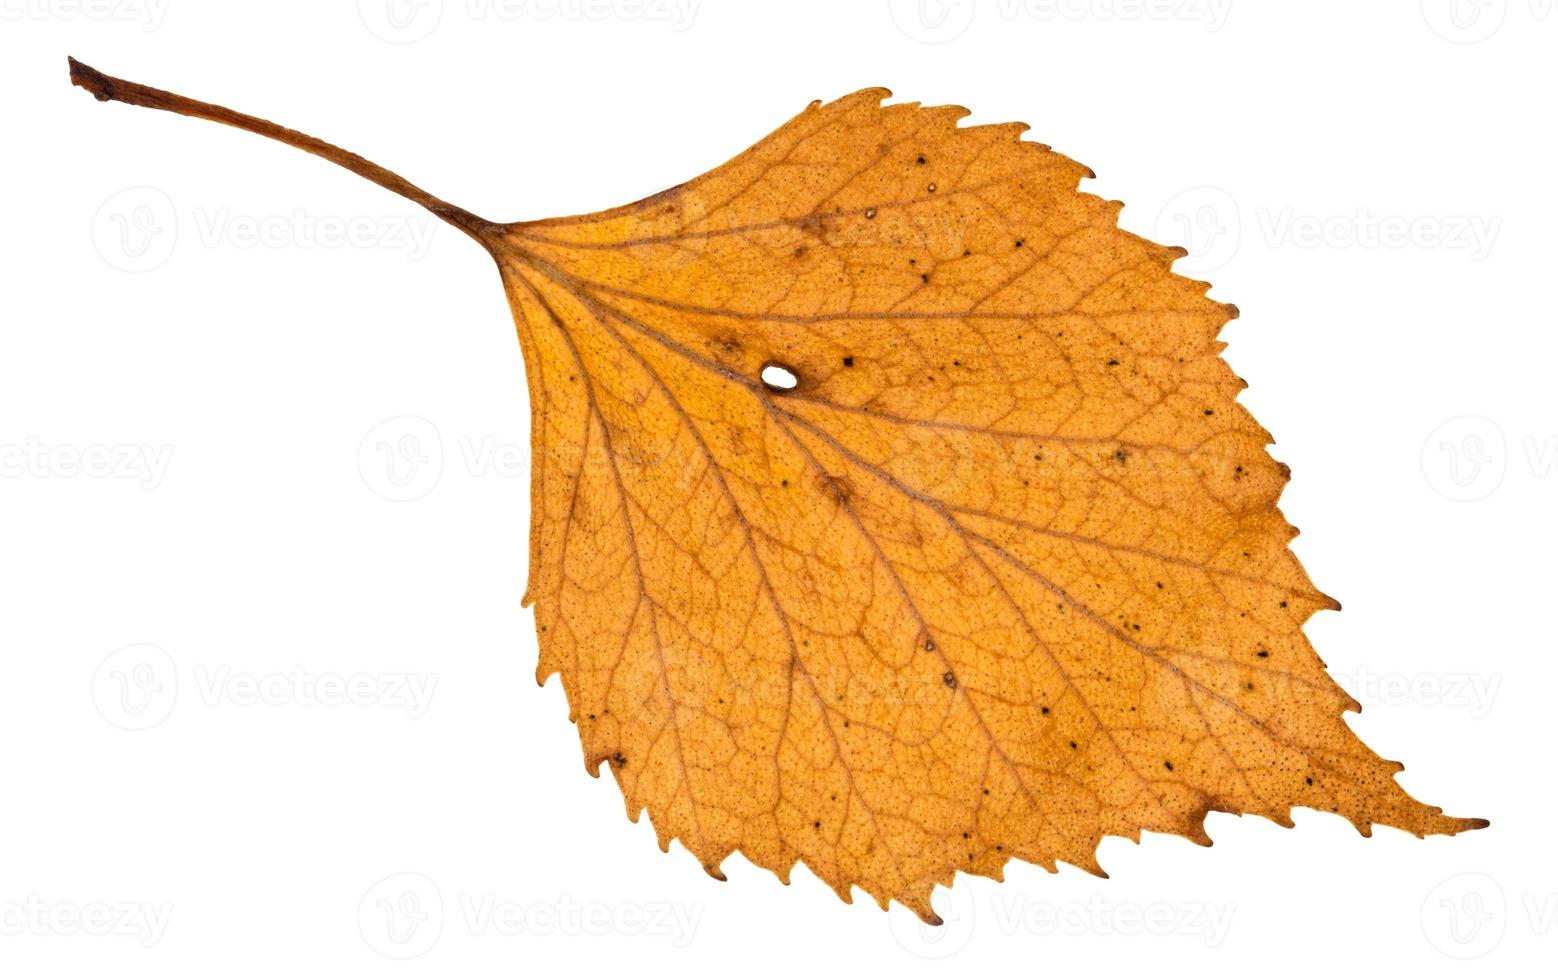 otoño hoja amarilla agujereada de abedul aislado foto